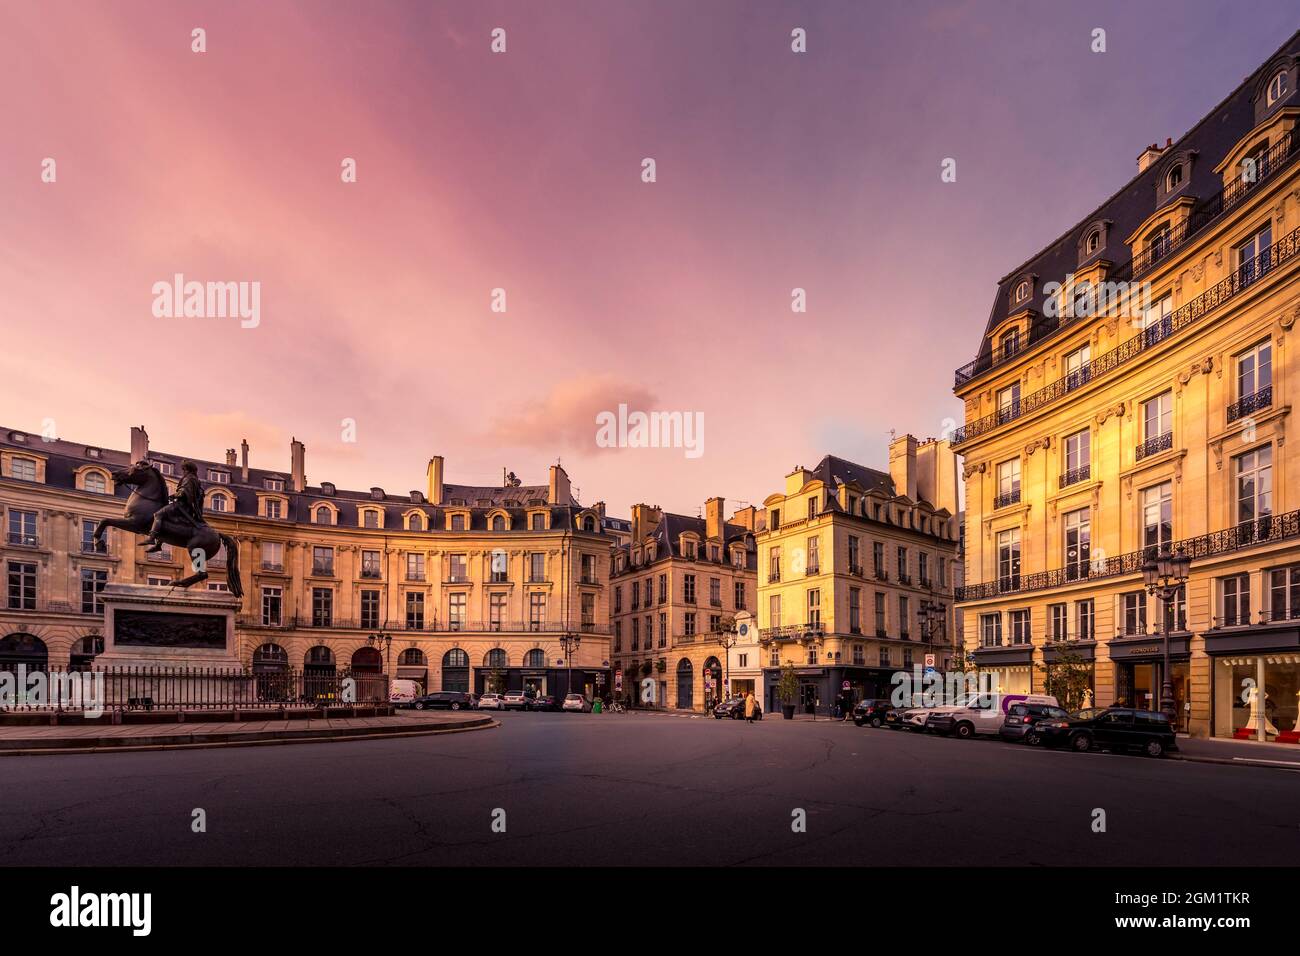 Paris, France - February 25, 2021: Beautiful buildings place des Victoires, typical parisian facades and windows Stock Photo